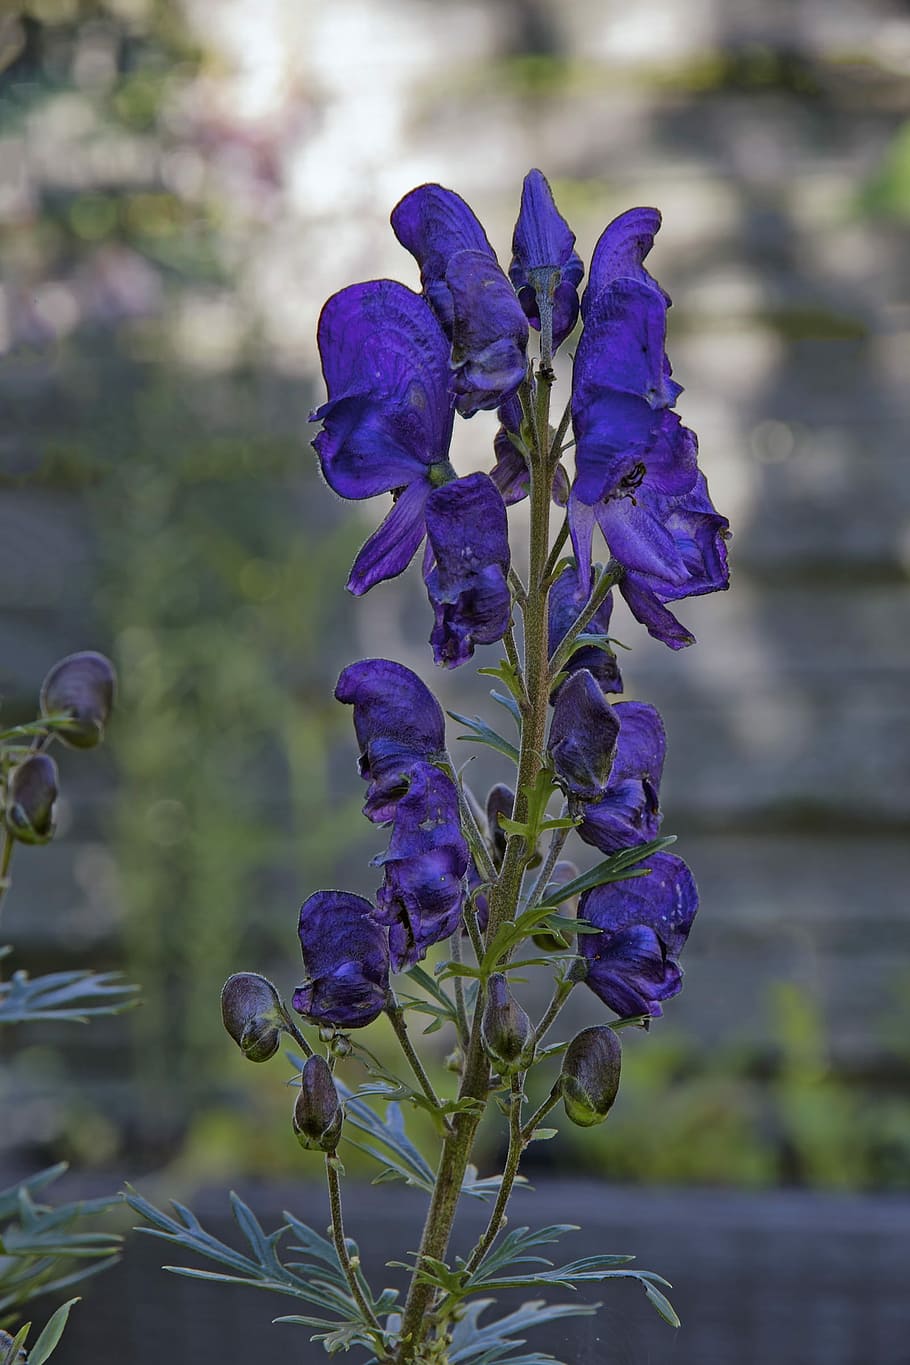 Monkshood, púrpura oscuro, azul, púrpura, aconitum napellus, acónito, hahnenfußgewächs, ranunculaceae, moenchskapp, gorra de pescador